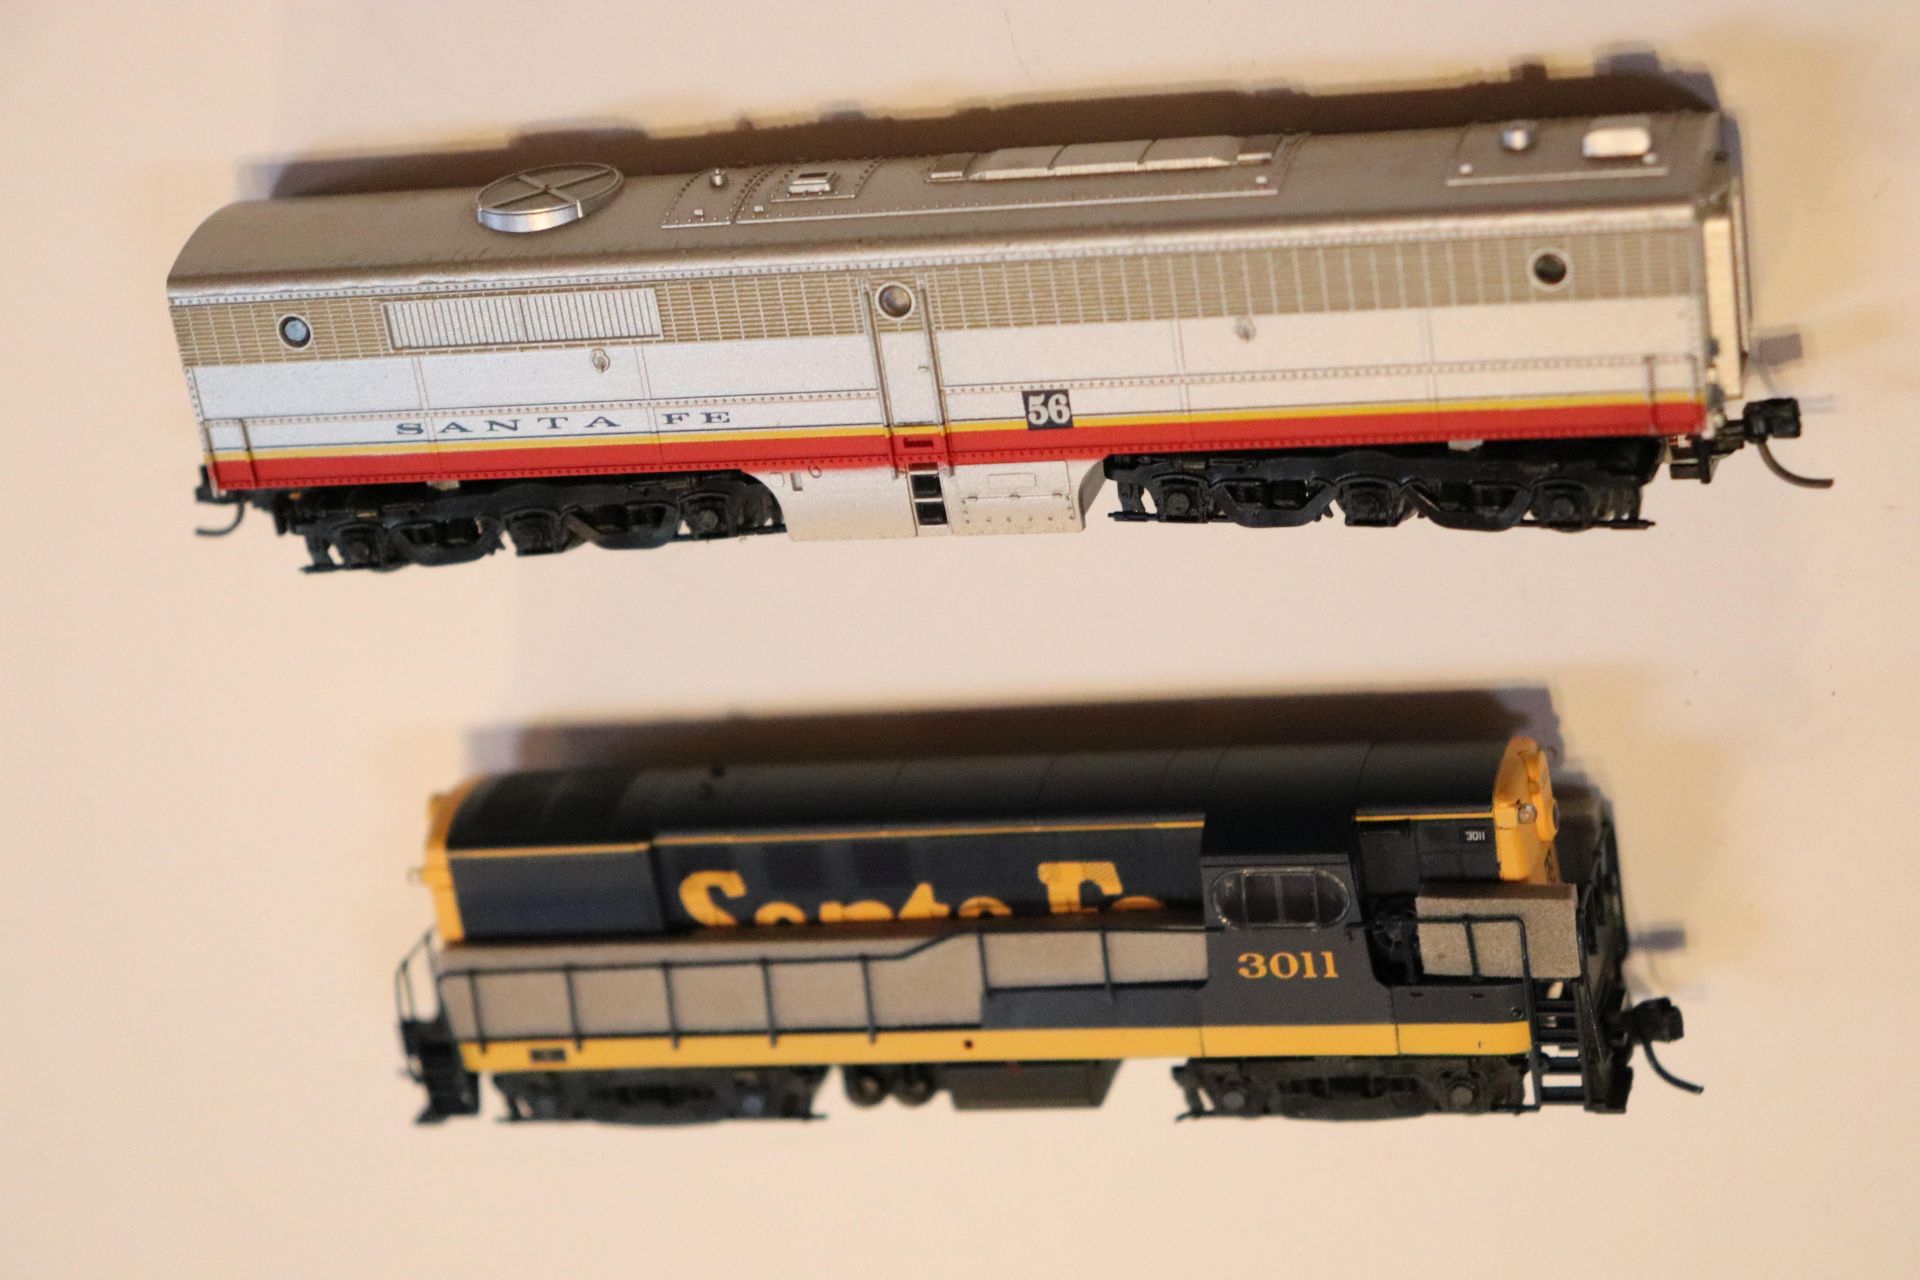 Atlas Santa Fe locomotive and a Santa Fe train car, N scale